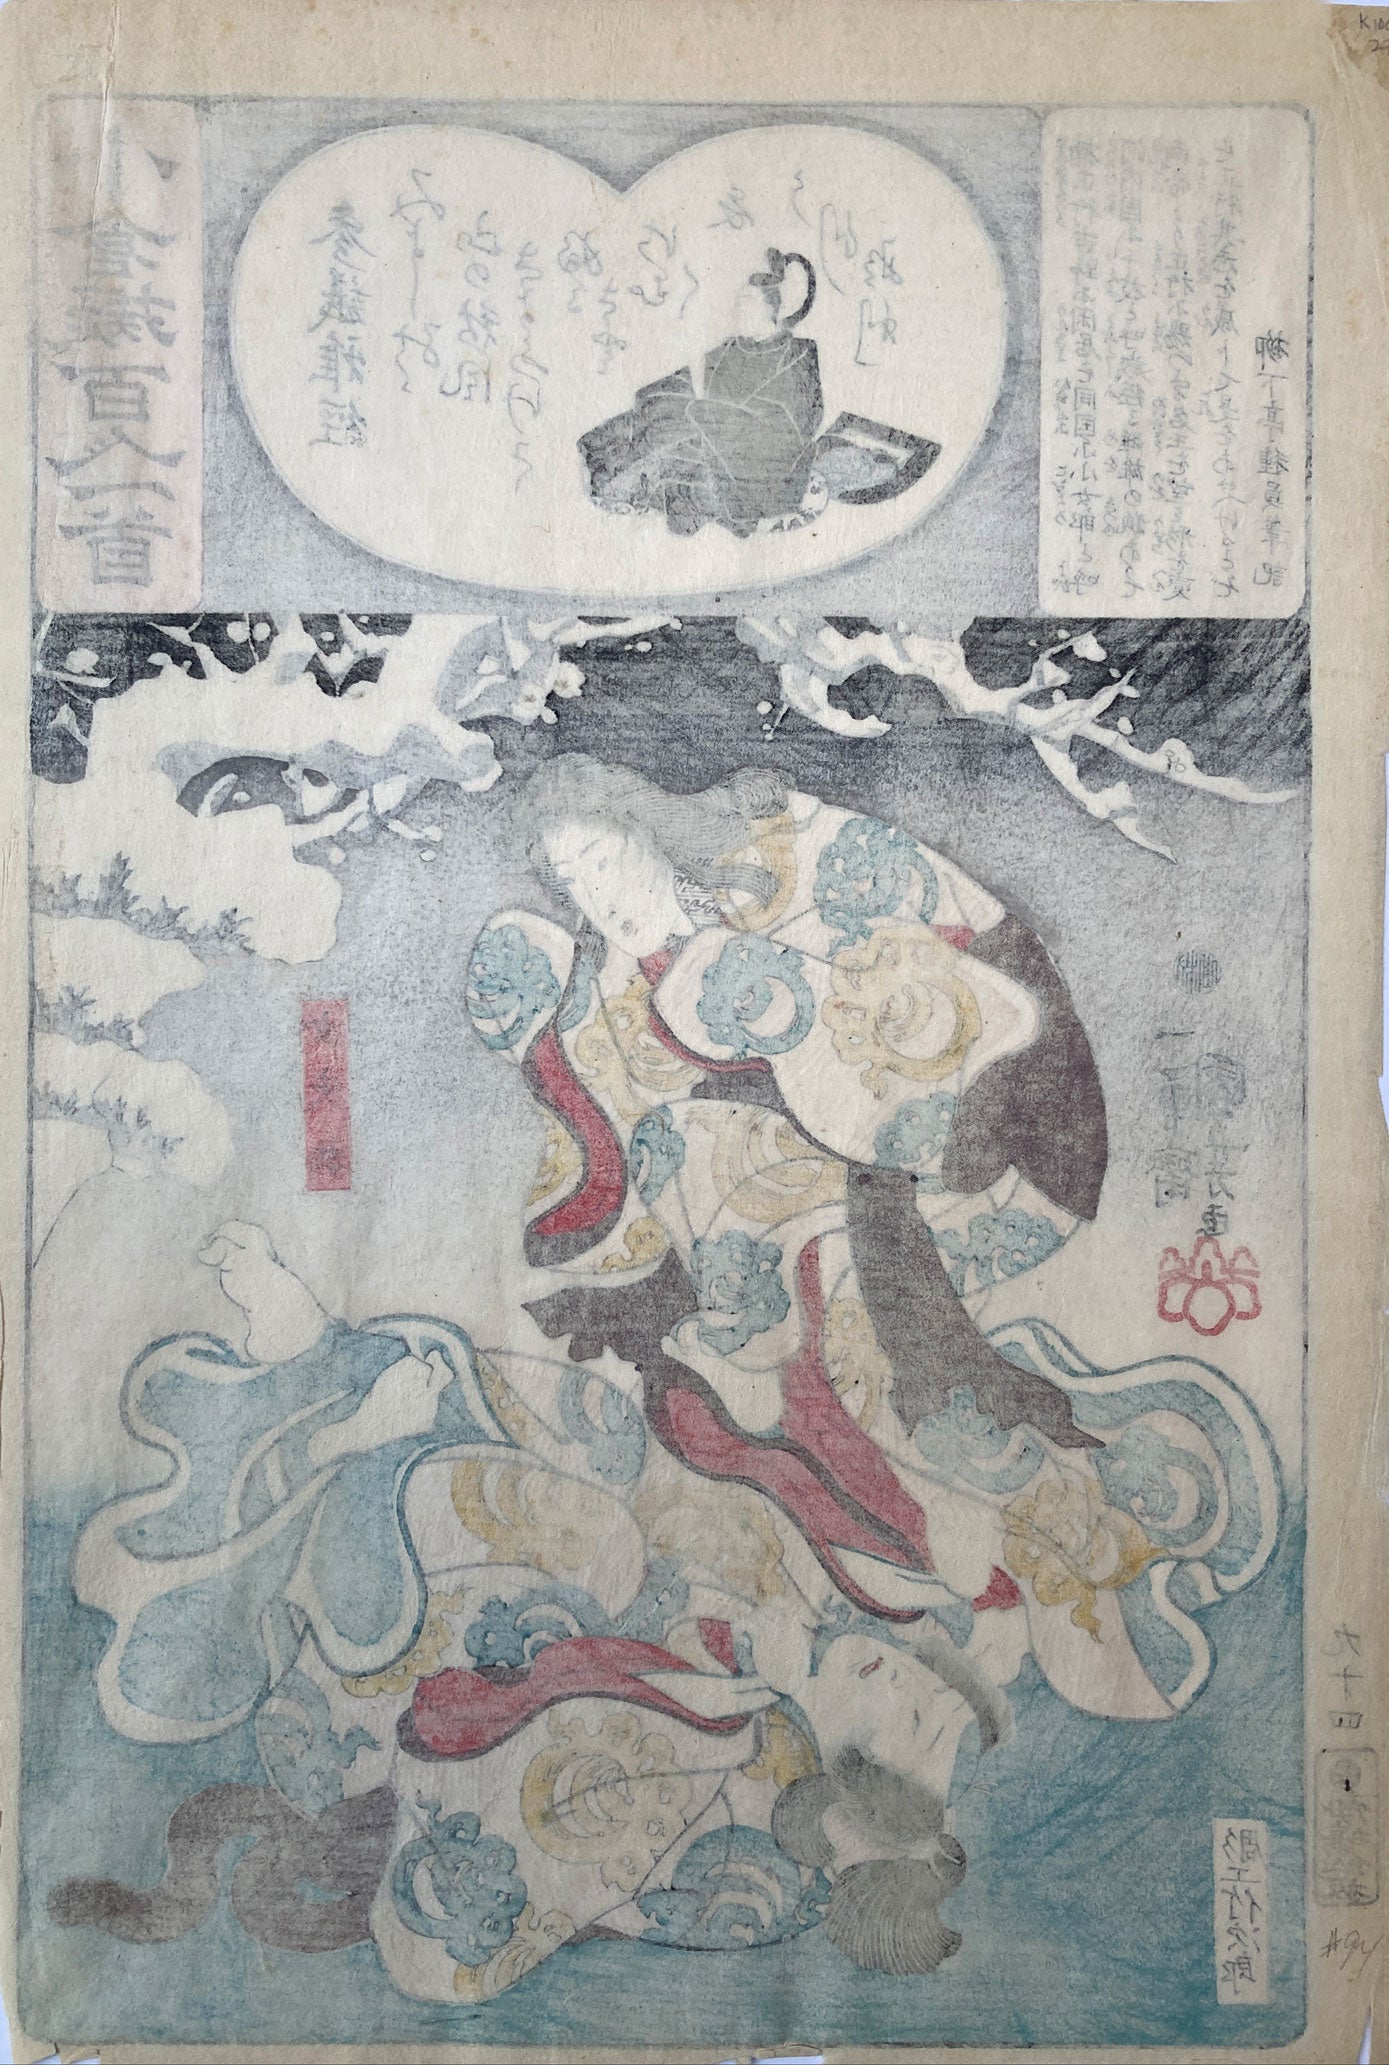 mg-0015-1-Kuniyoshi-Asukai-Masatsune-japanese-woodblock-print